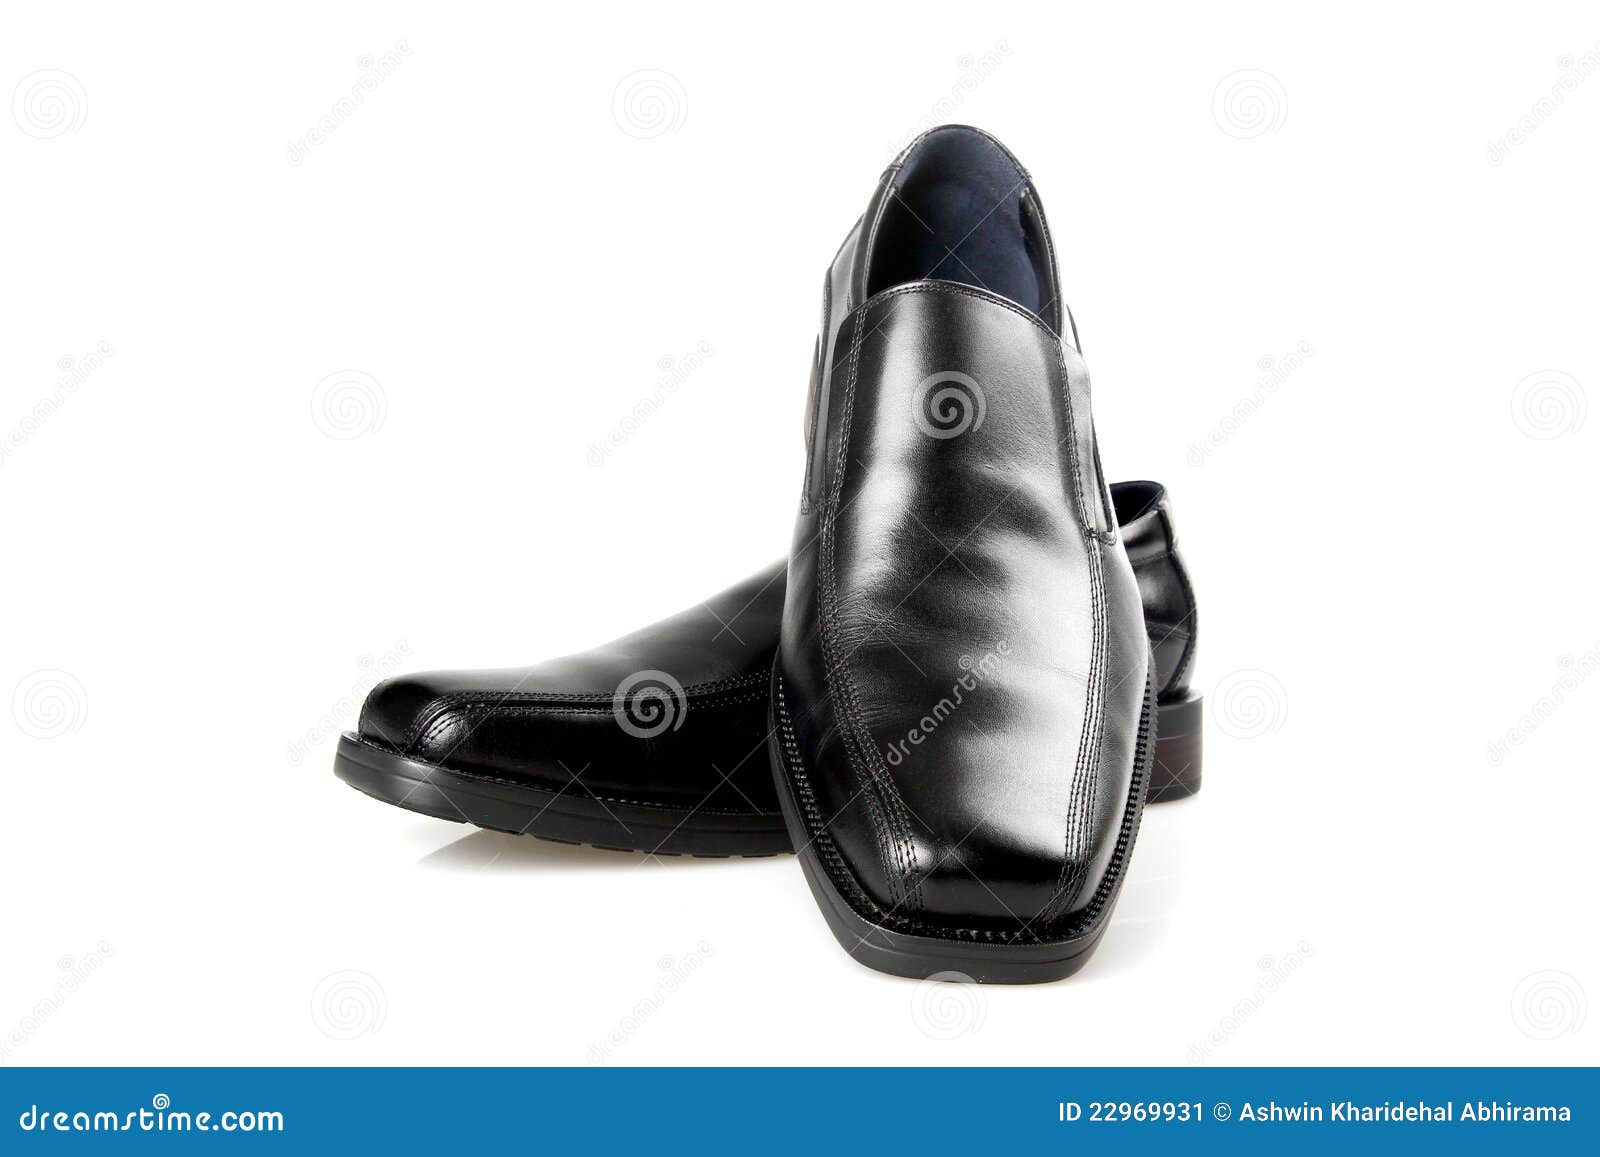 Black men s shoes stock image. Image of human, elegant - 22969931